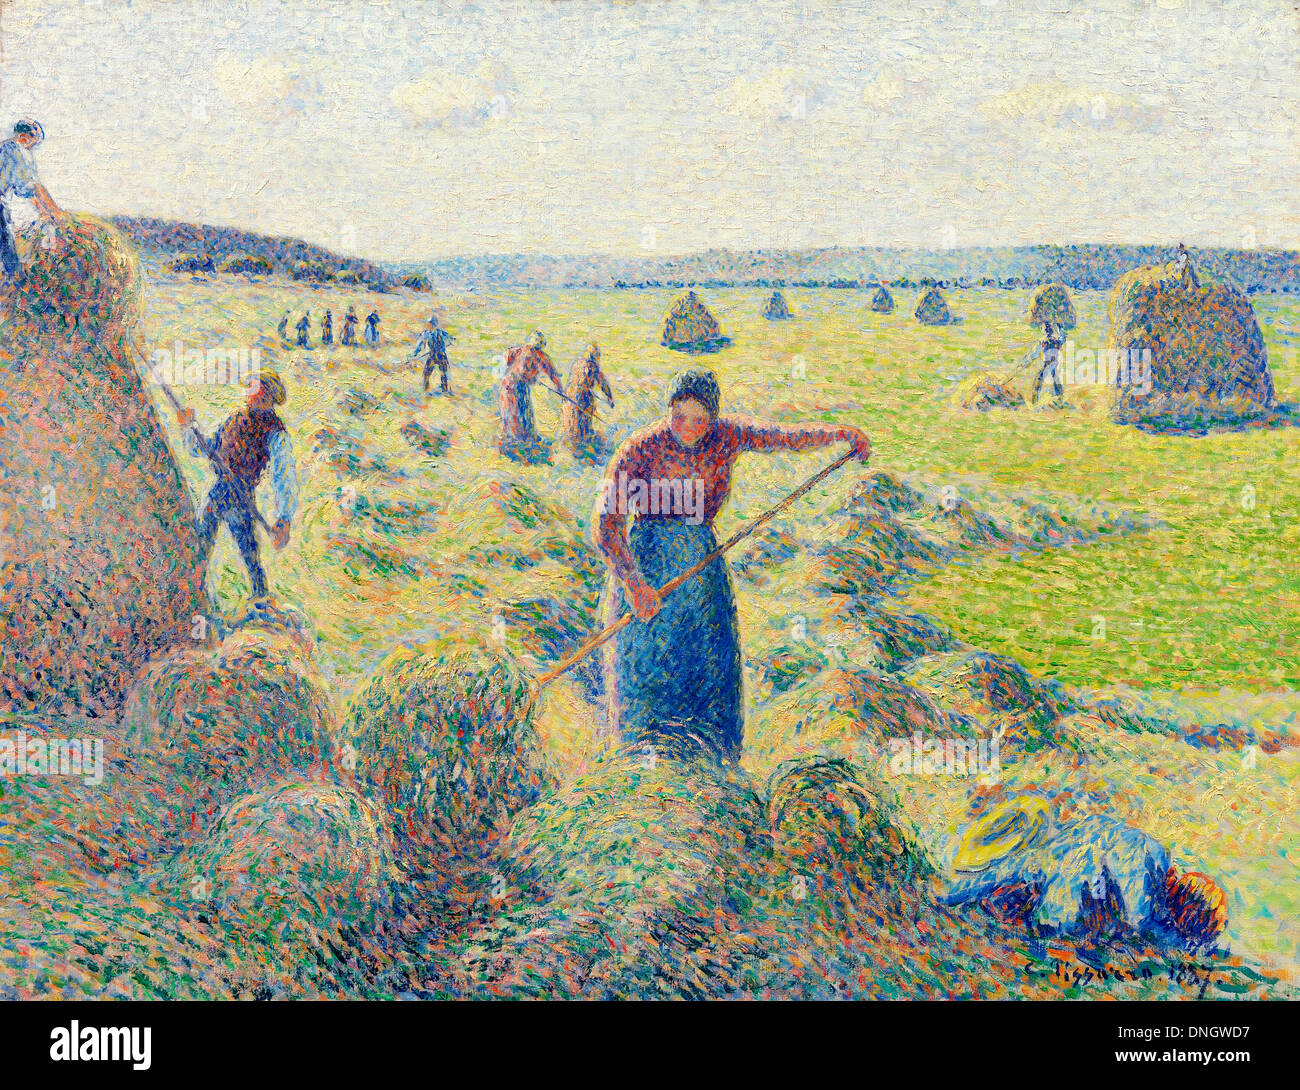 Camille Pissarro, The Harvest of Hay in Eragny 1887 Oil on canvas. Van Gogh Museum, Amsterdam. Stock Photo